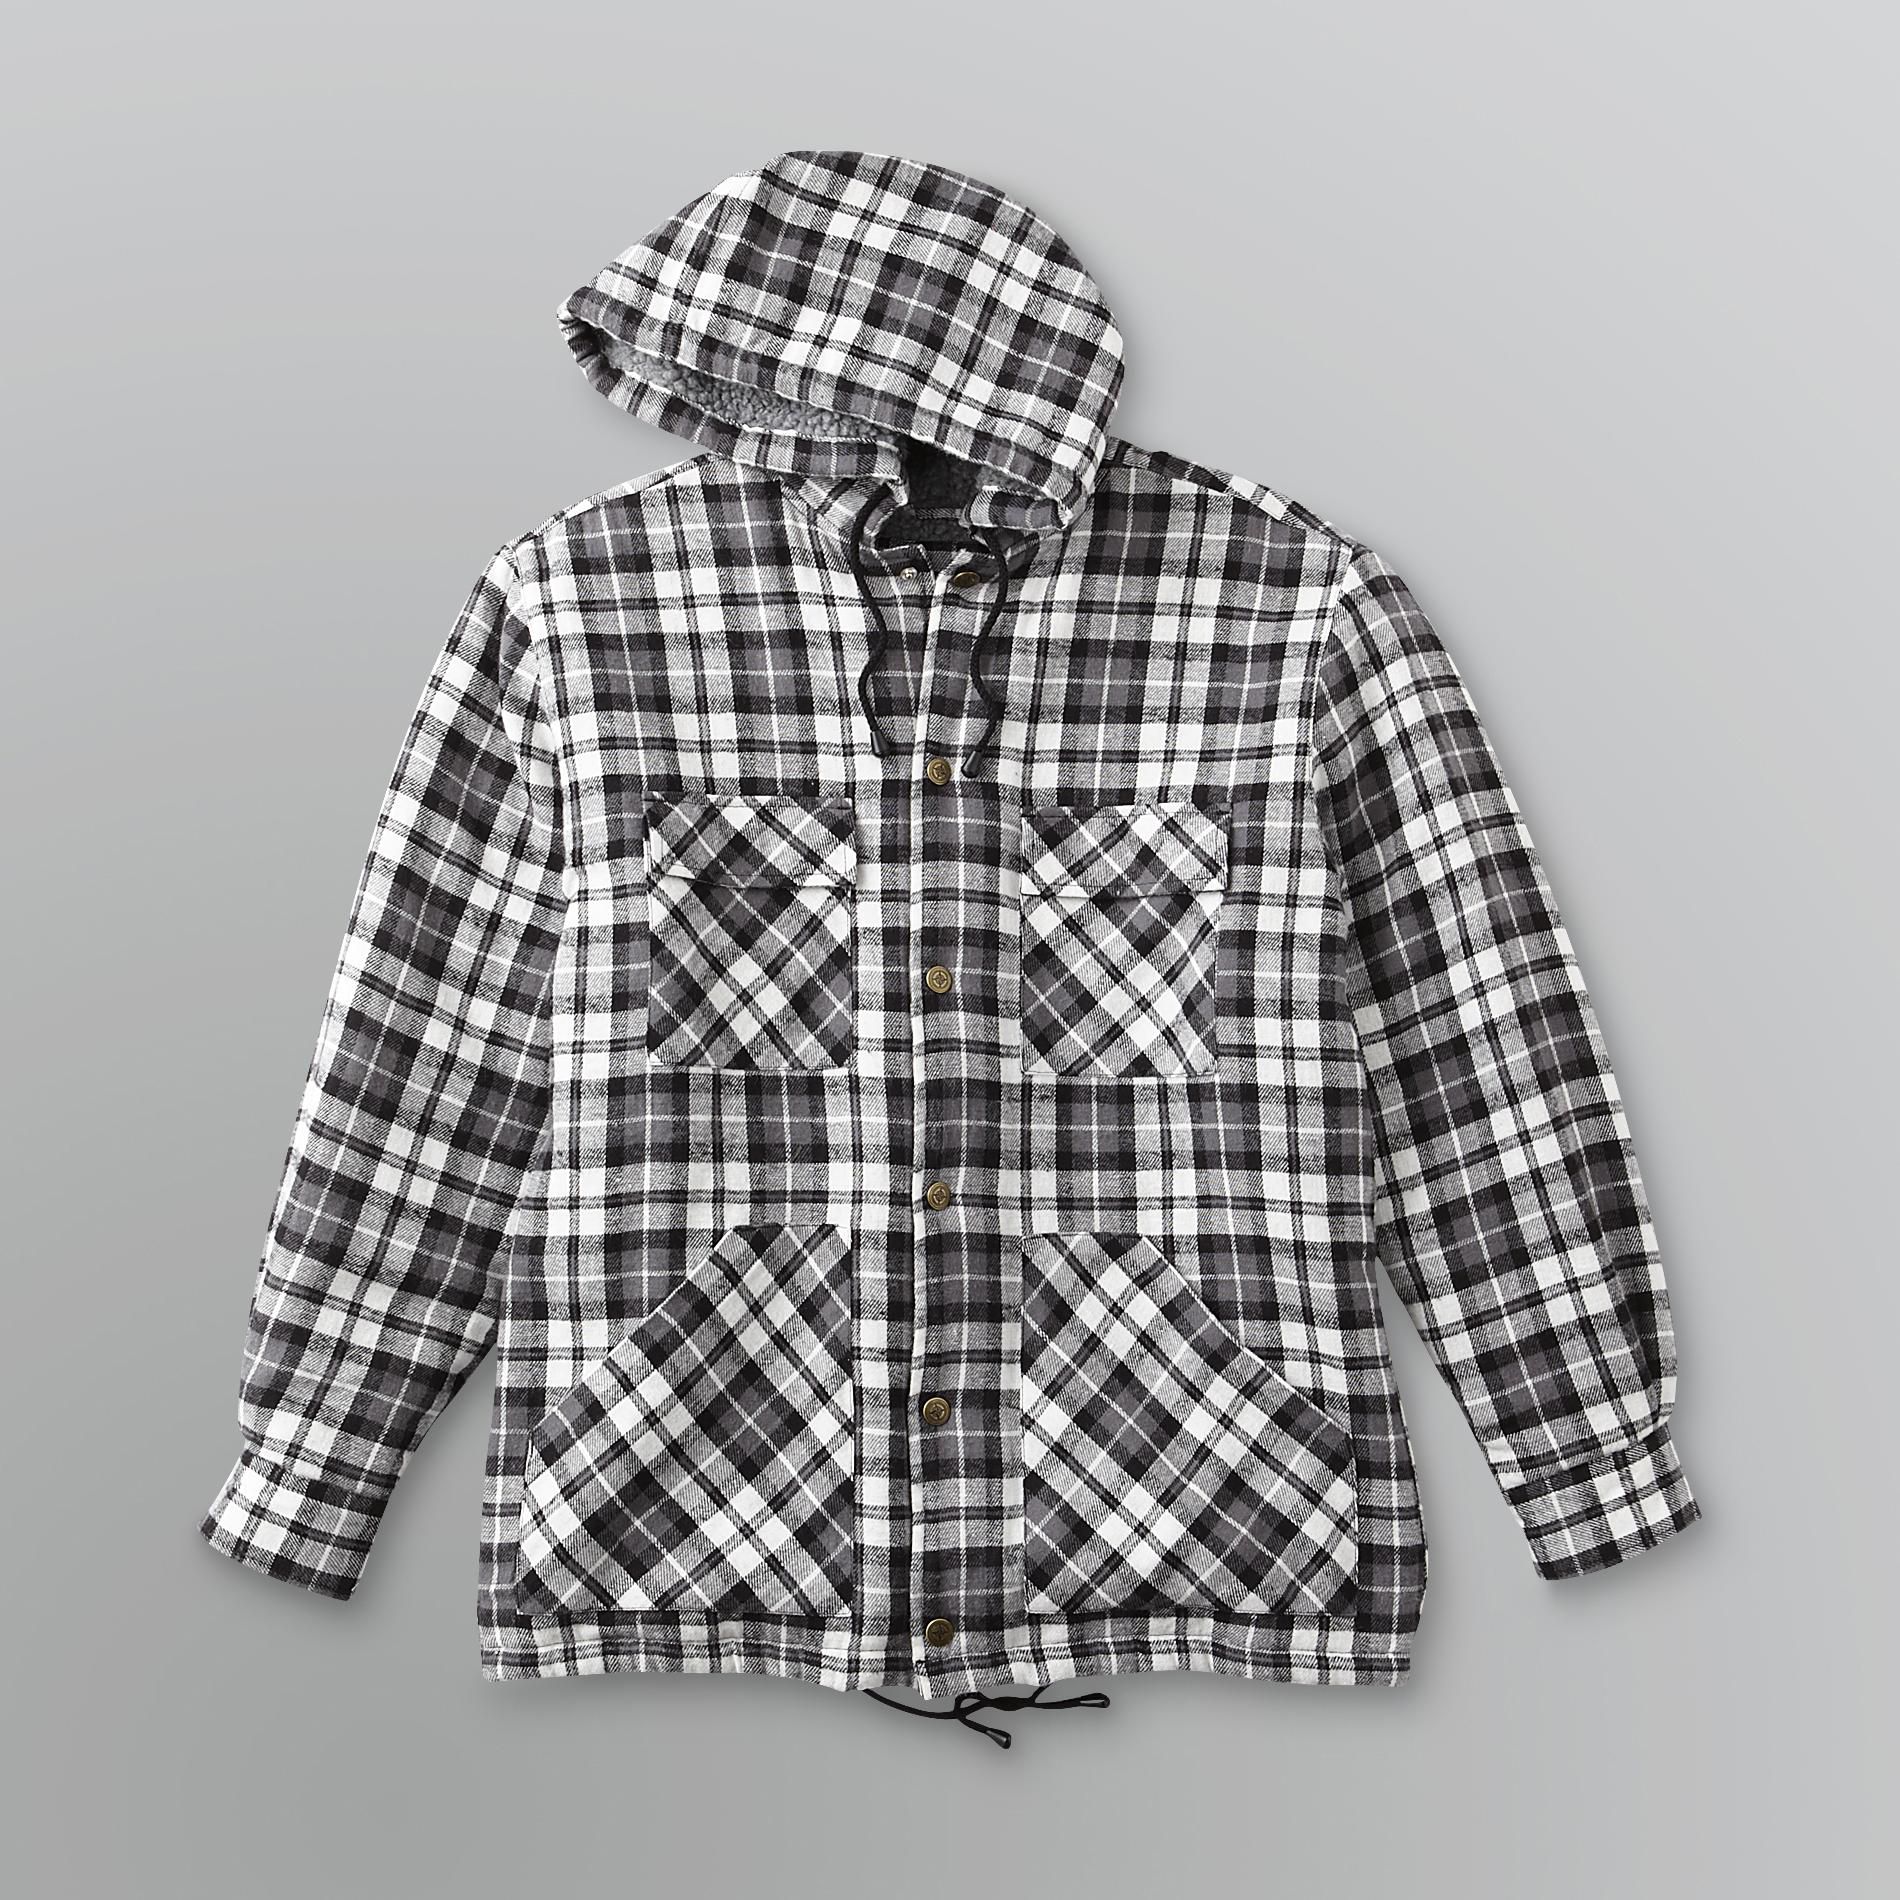 Basic Editions Men's Plaid Fleece Lined Hoodie Jacket